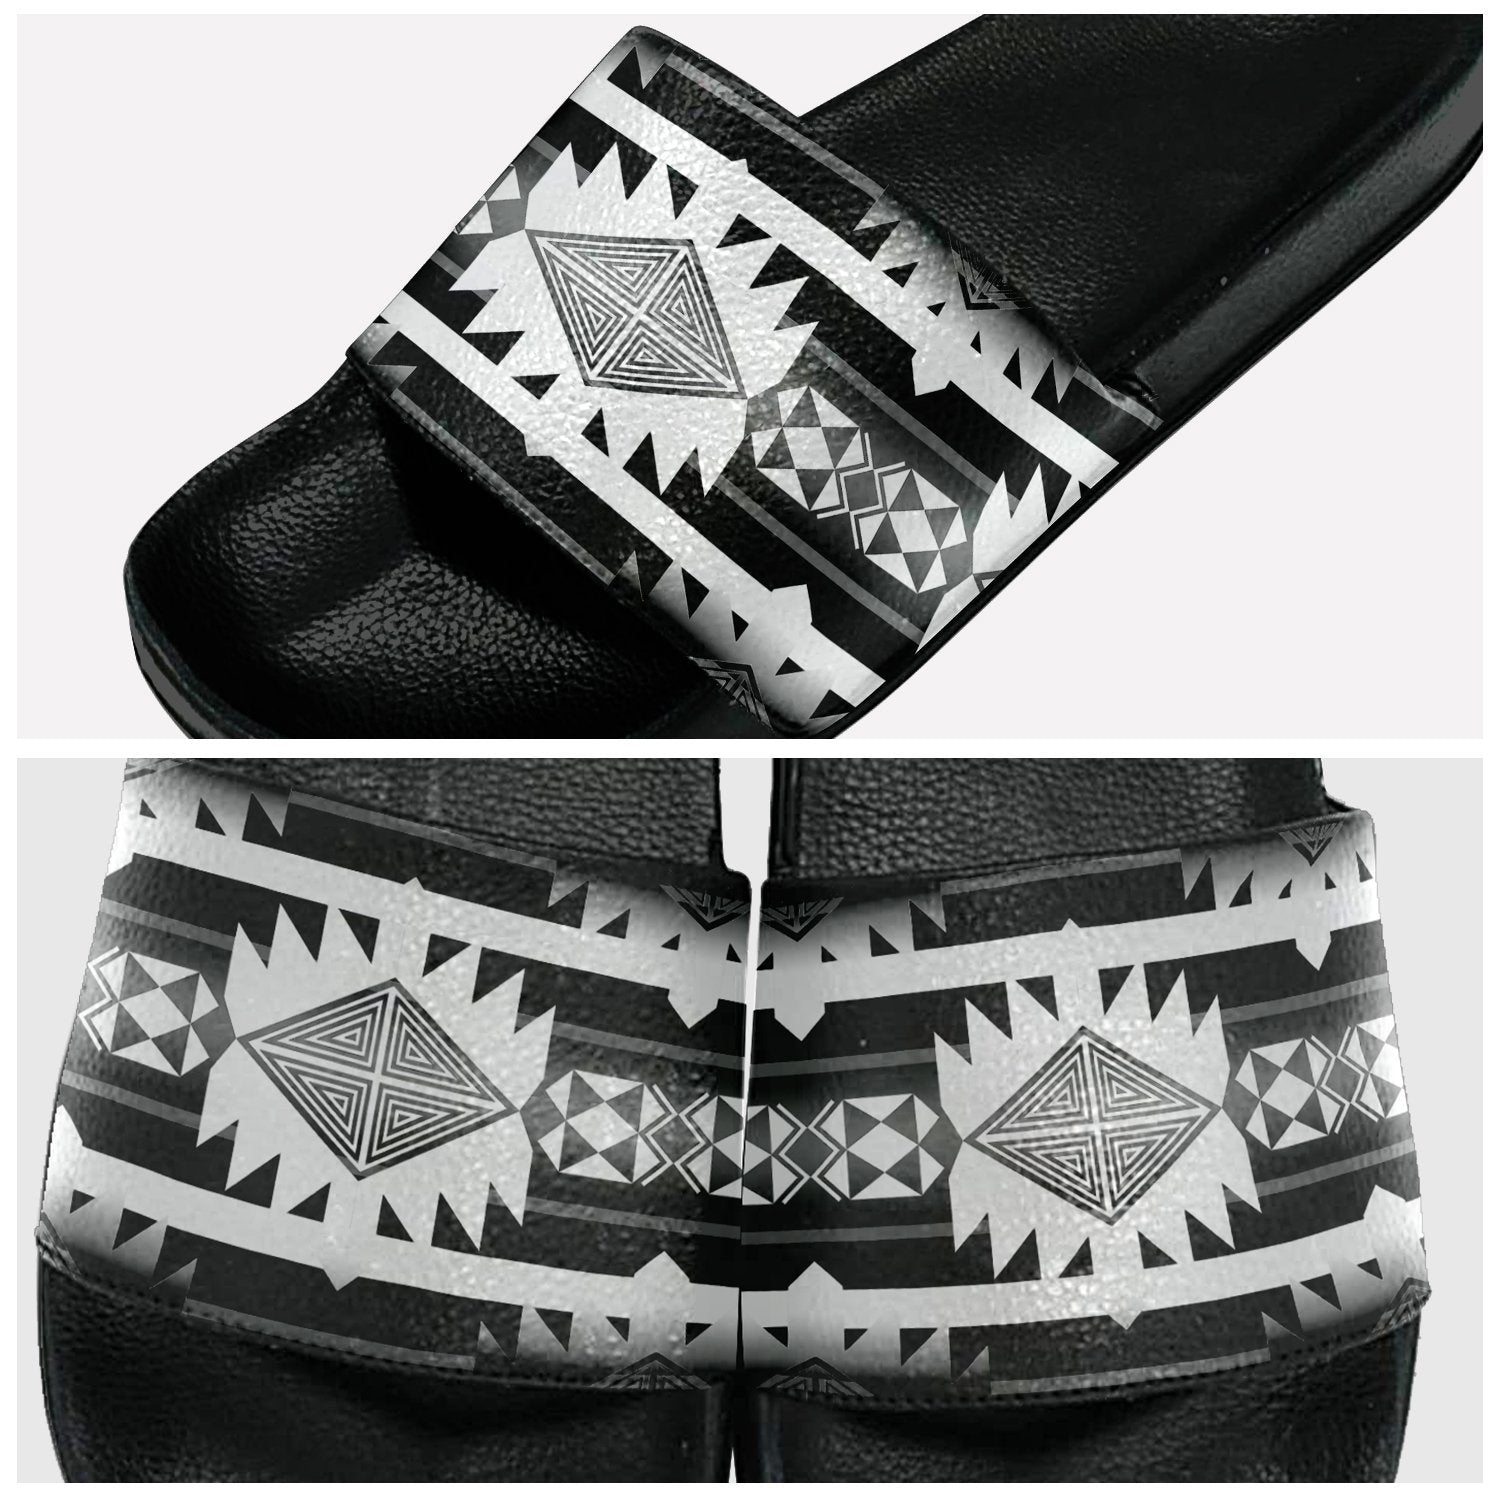 Okotoks Black and White Slide Sandals 49 Dzine 